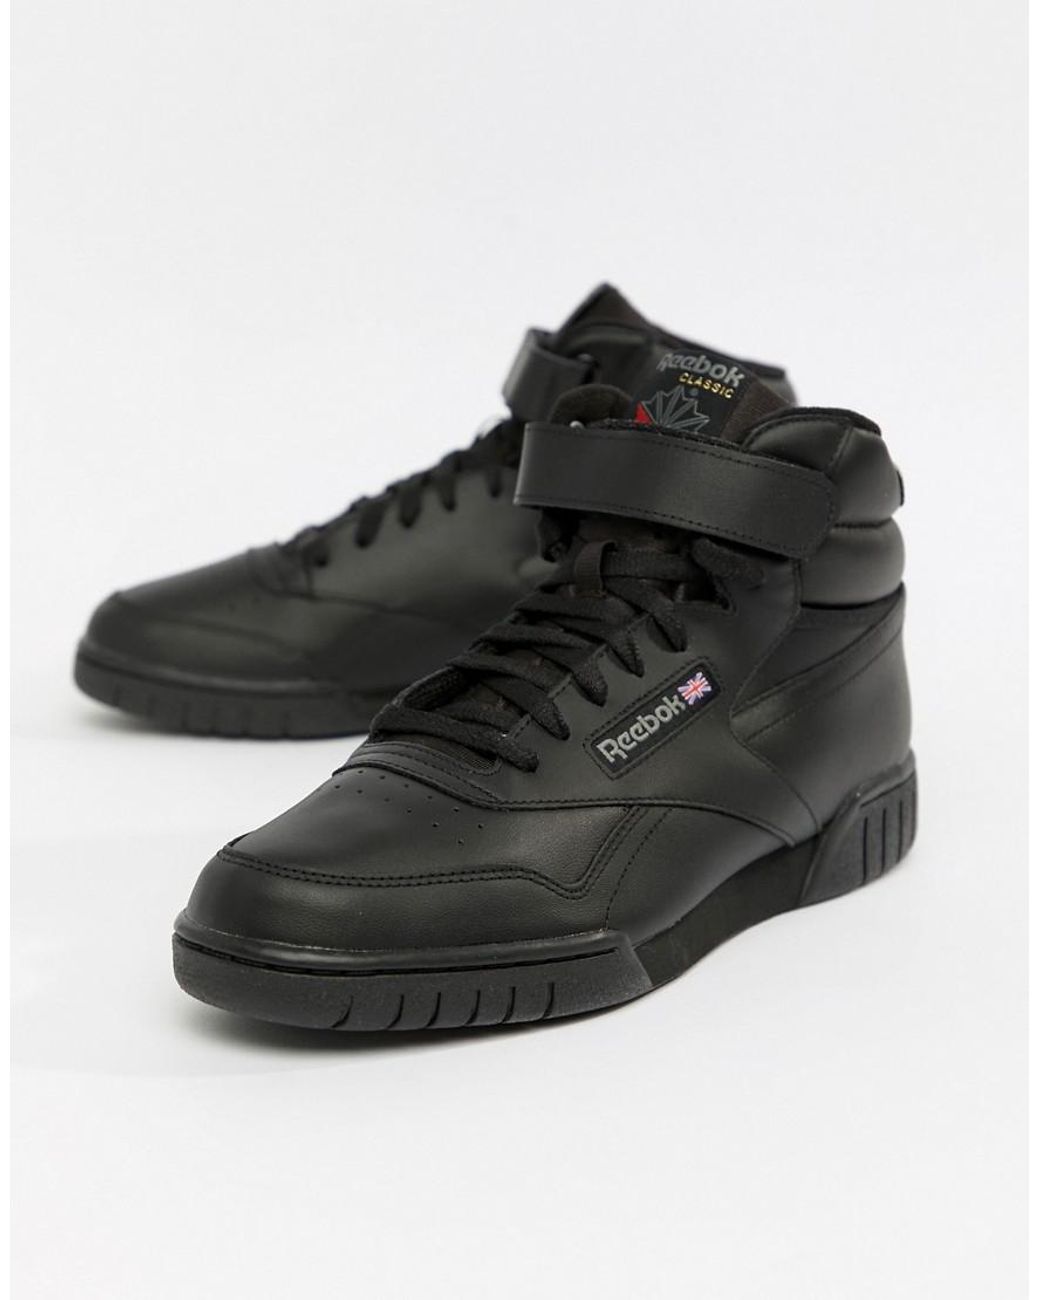 Reebok Men's Ex O Fit Hi Top Sneakers In Black 3478